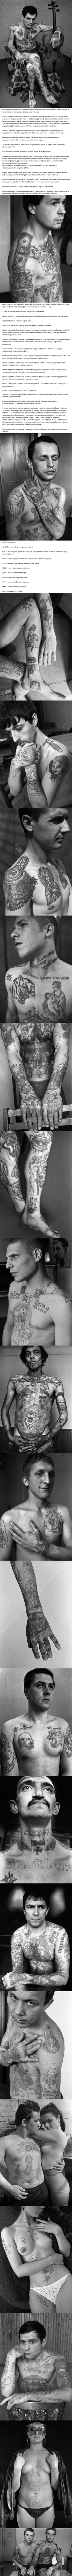 Russian criminal tattoos - NSFW, Society, Crime, Tattoo, Criminals, Prison, Longpost